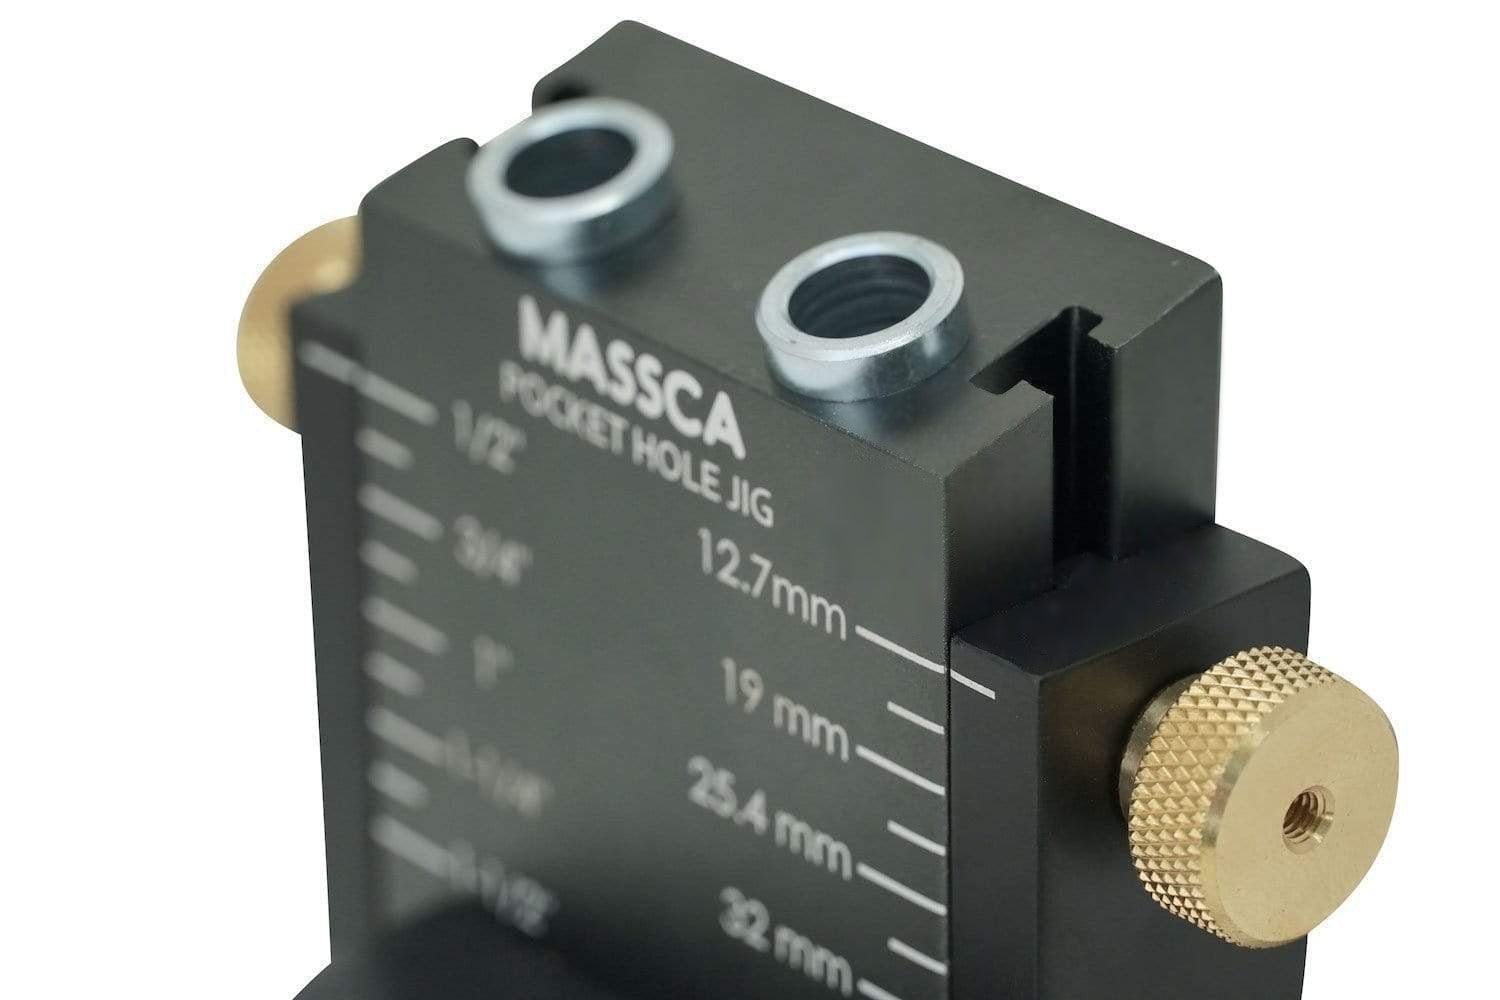 Massca M2 PRO Aluminum Pocket Hole Jig System | Bundle #6 | Woodworking | Hamilton Lee Supply